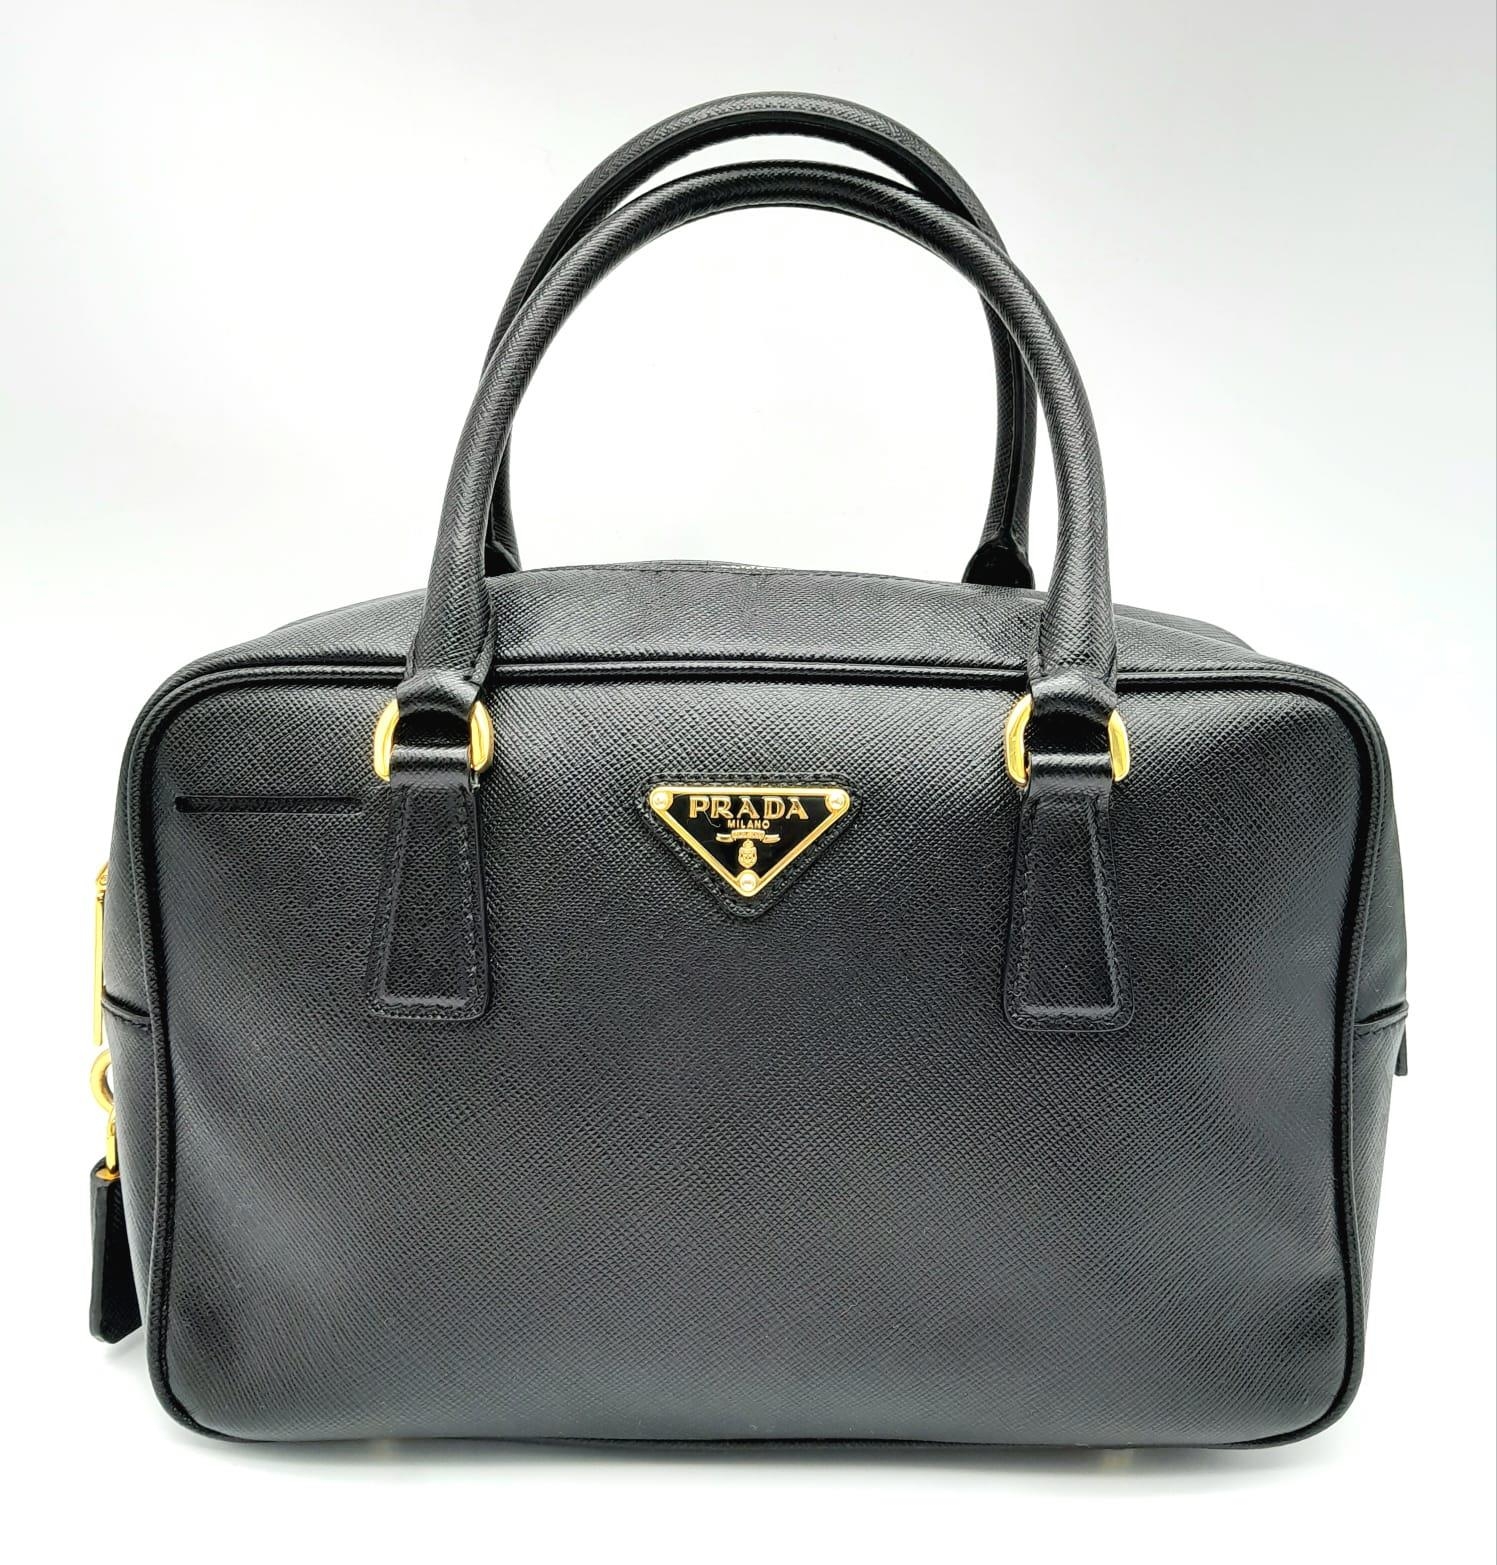 A Prada Black Bauletto Handbag. Saffiano leather exterior with gold-toned hardware, padlock, 2